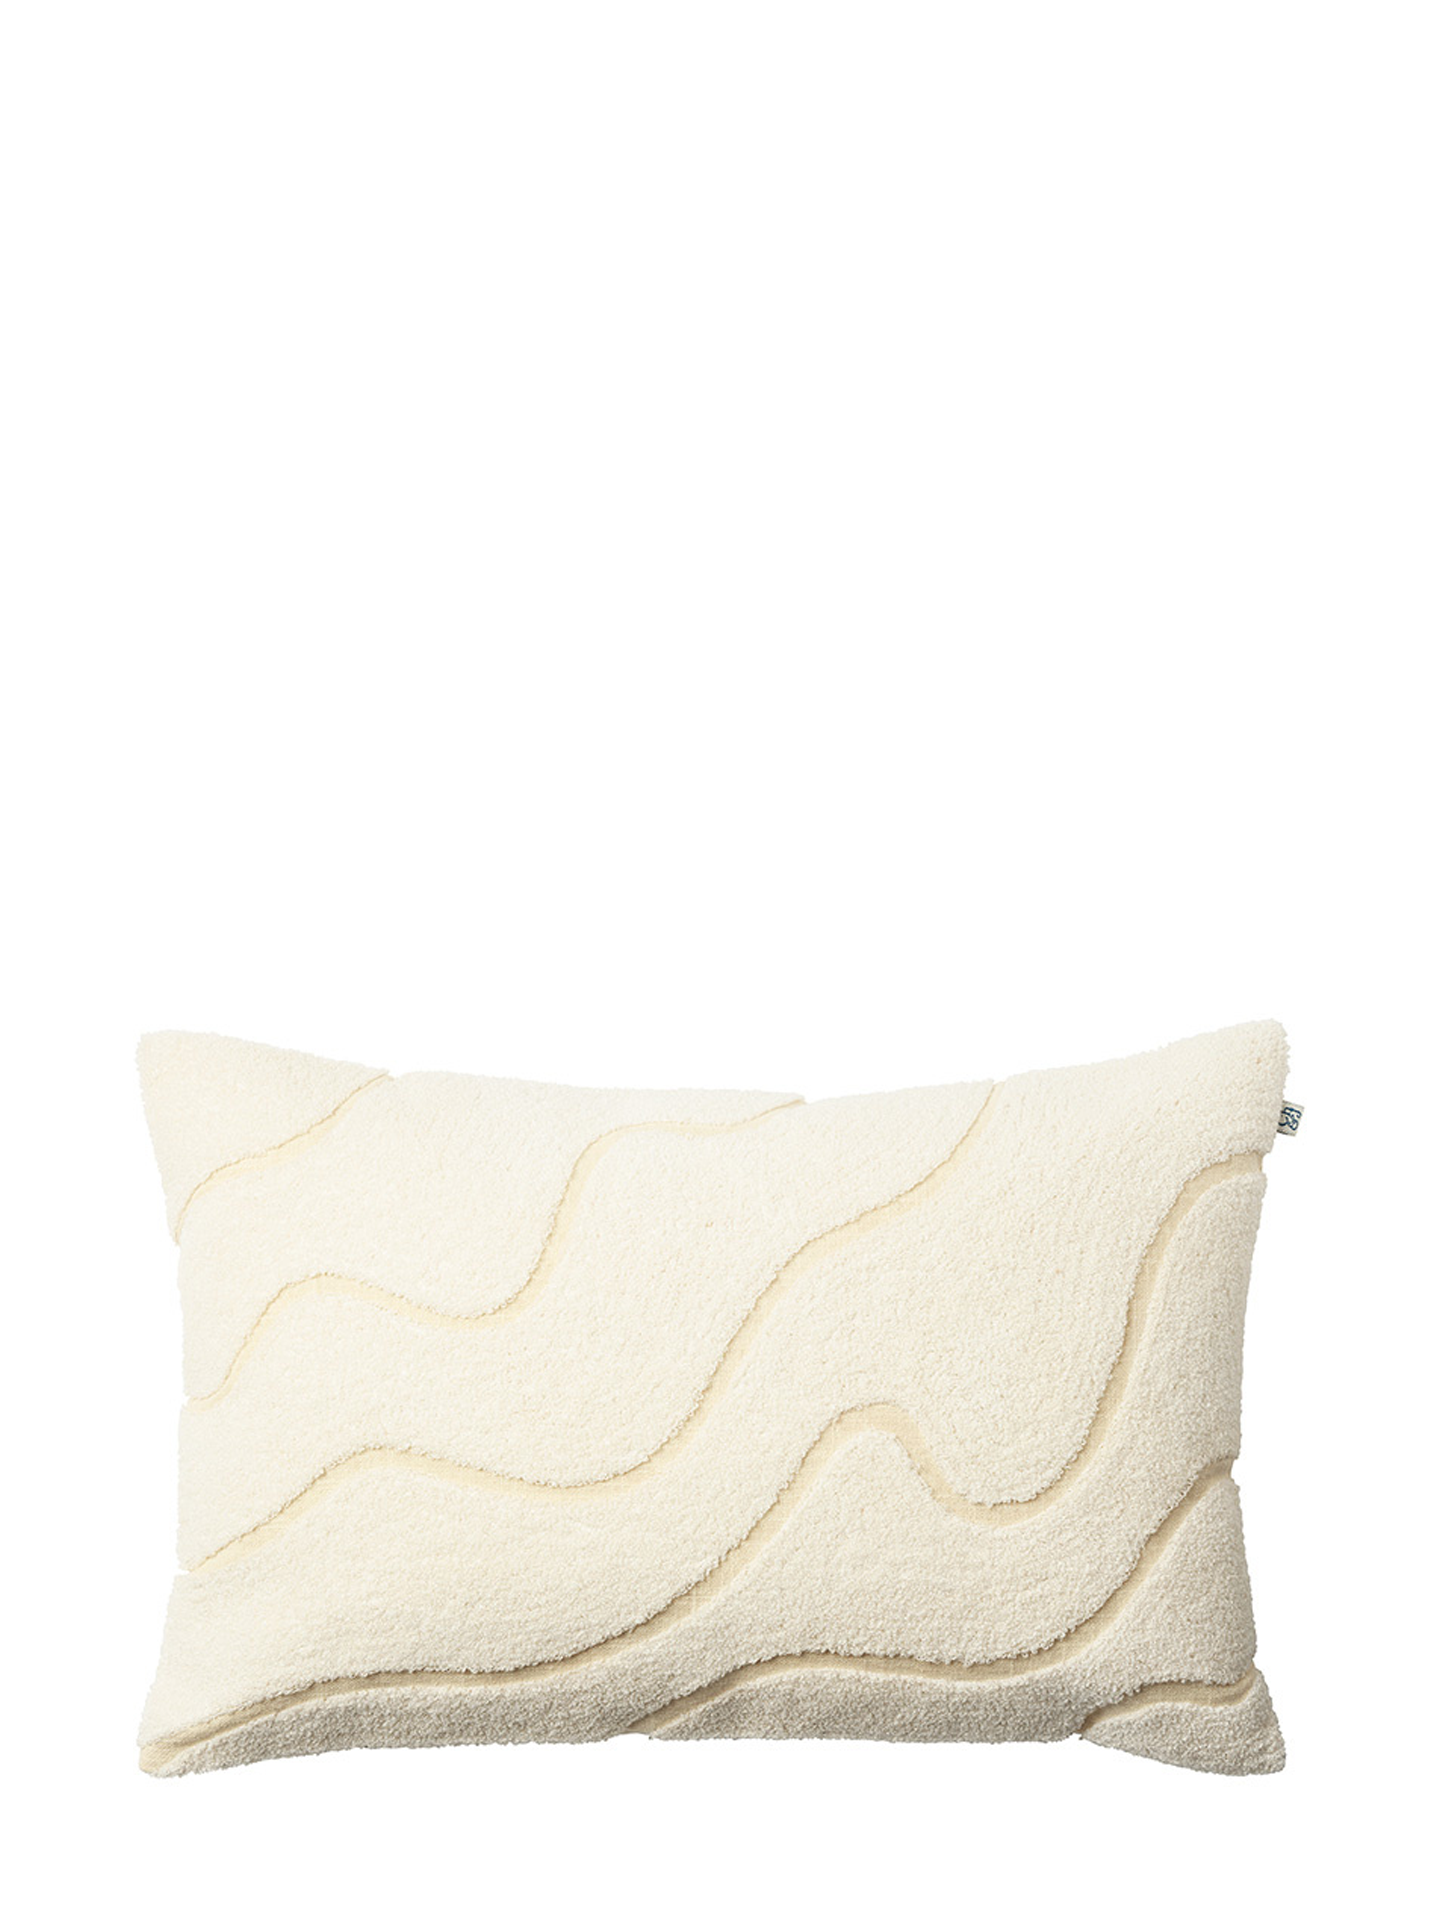 Kashi Cushion Cover, Off-white